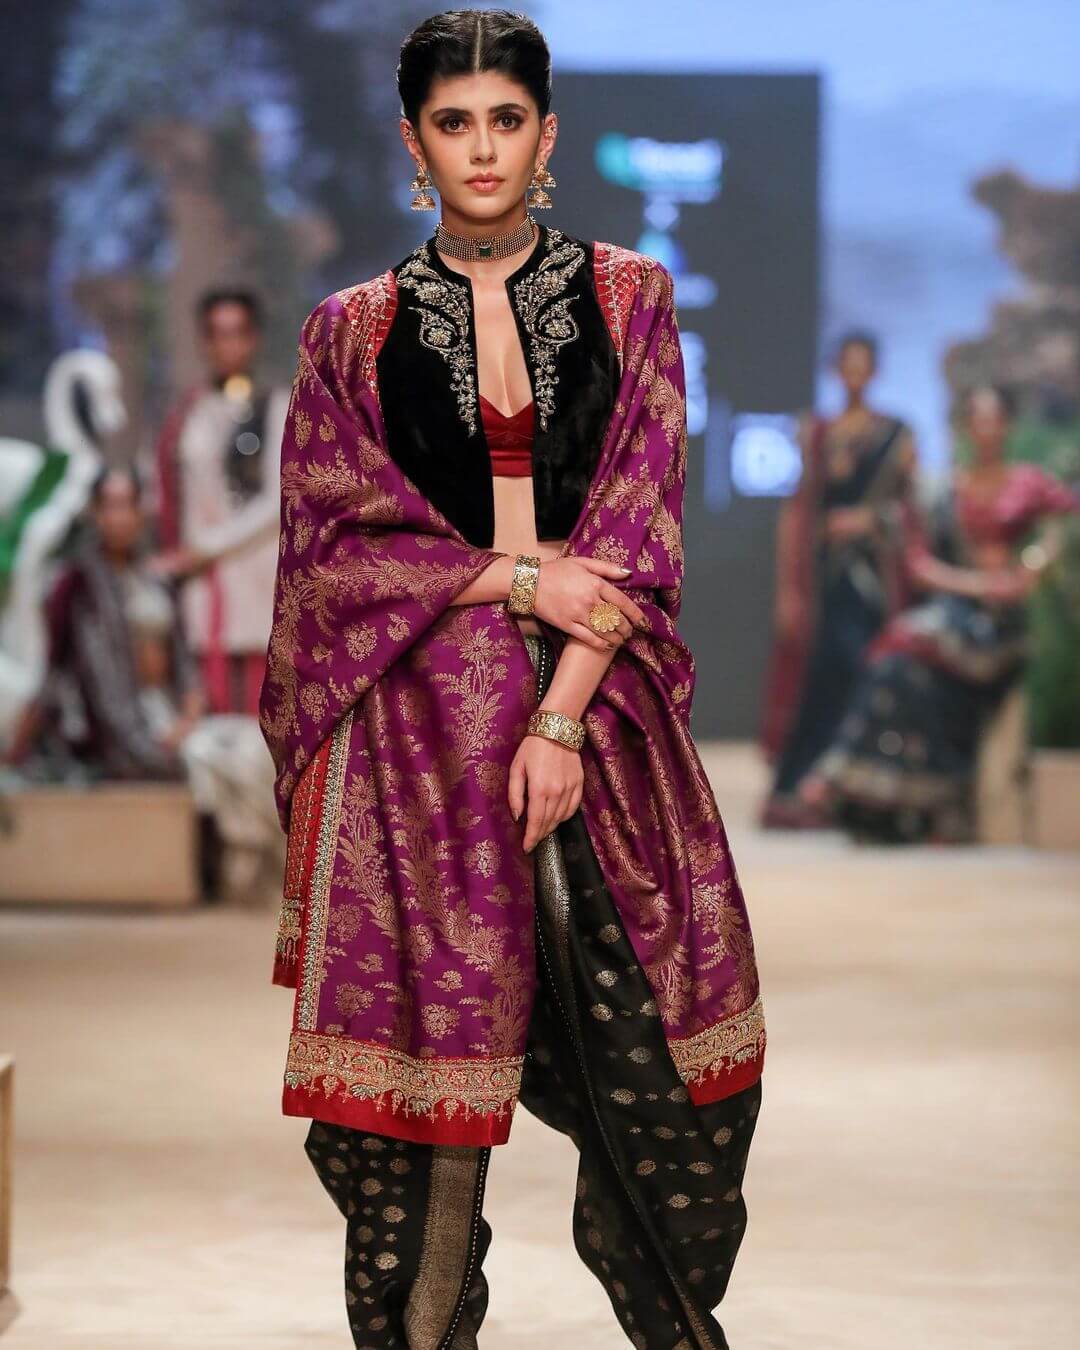 Sanjana Sanghi's Stunning Entry In Amazing Dress